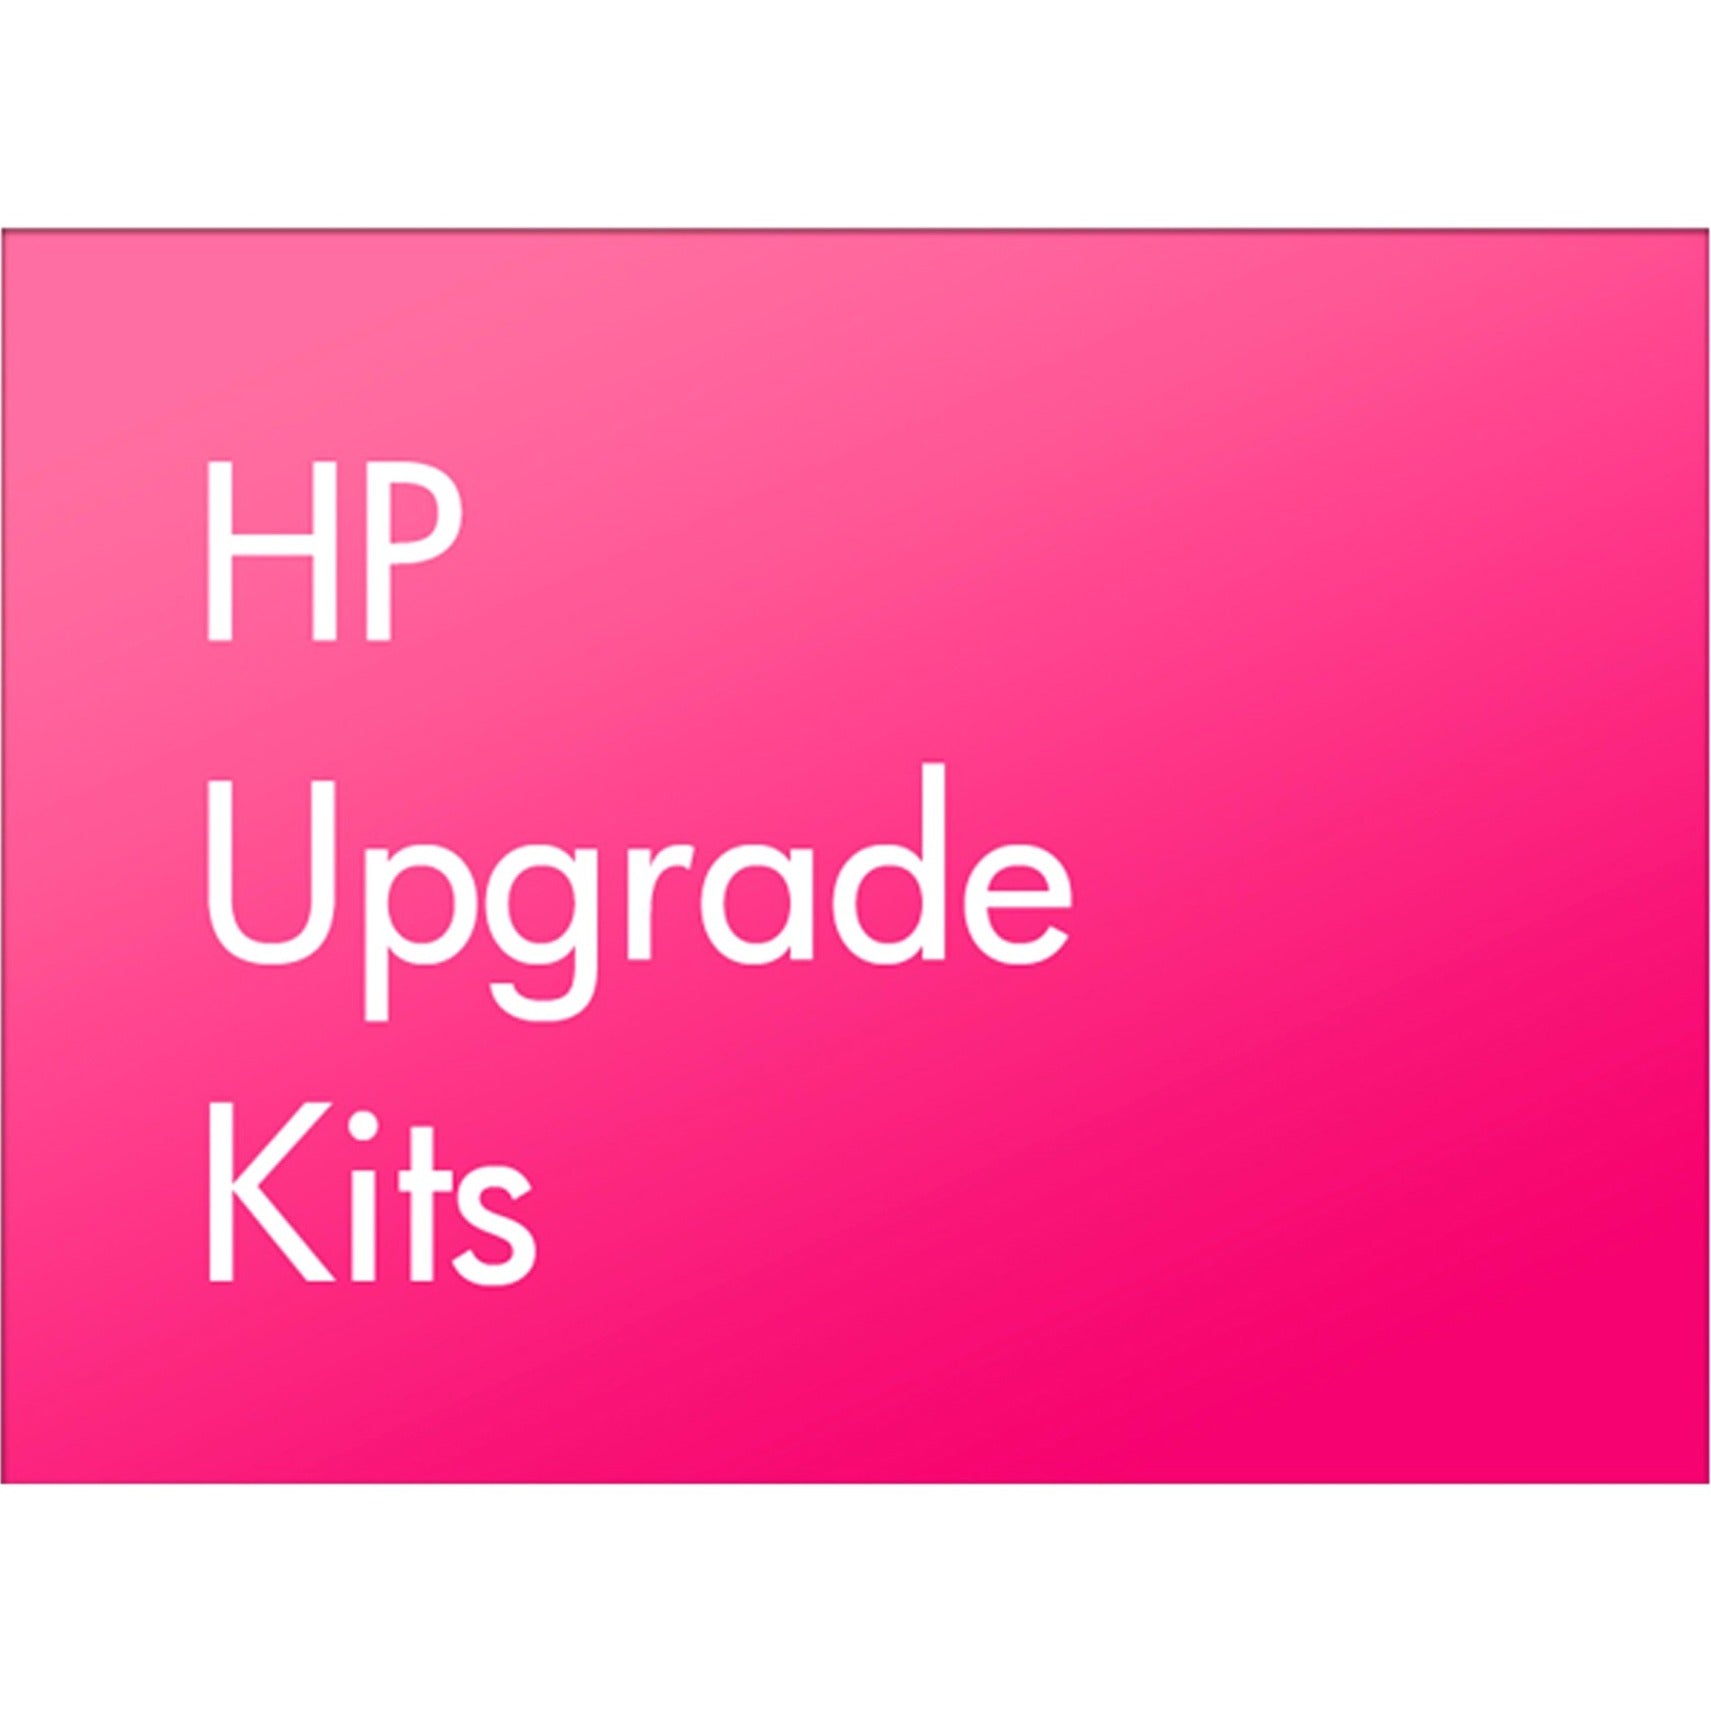 HPE 720863-B21 Mounting Rail Kit, for HP ProLiant Gen8 Servers